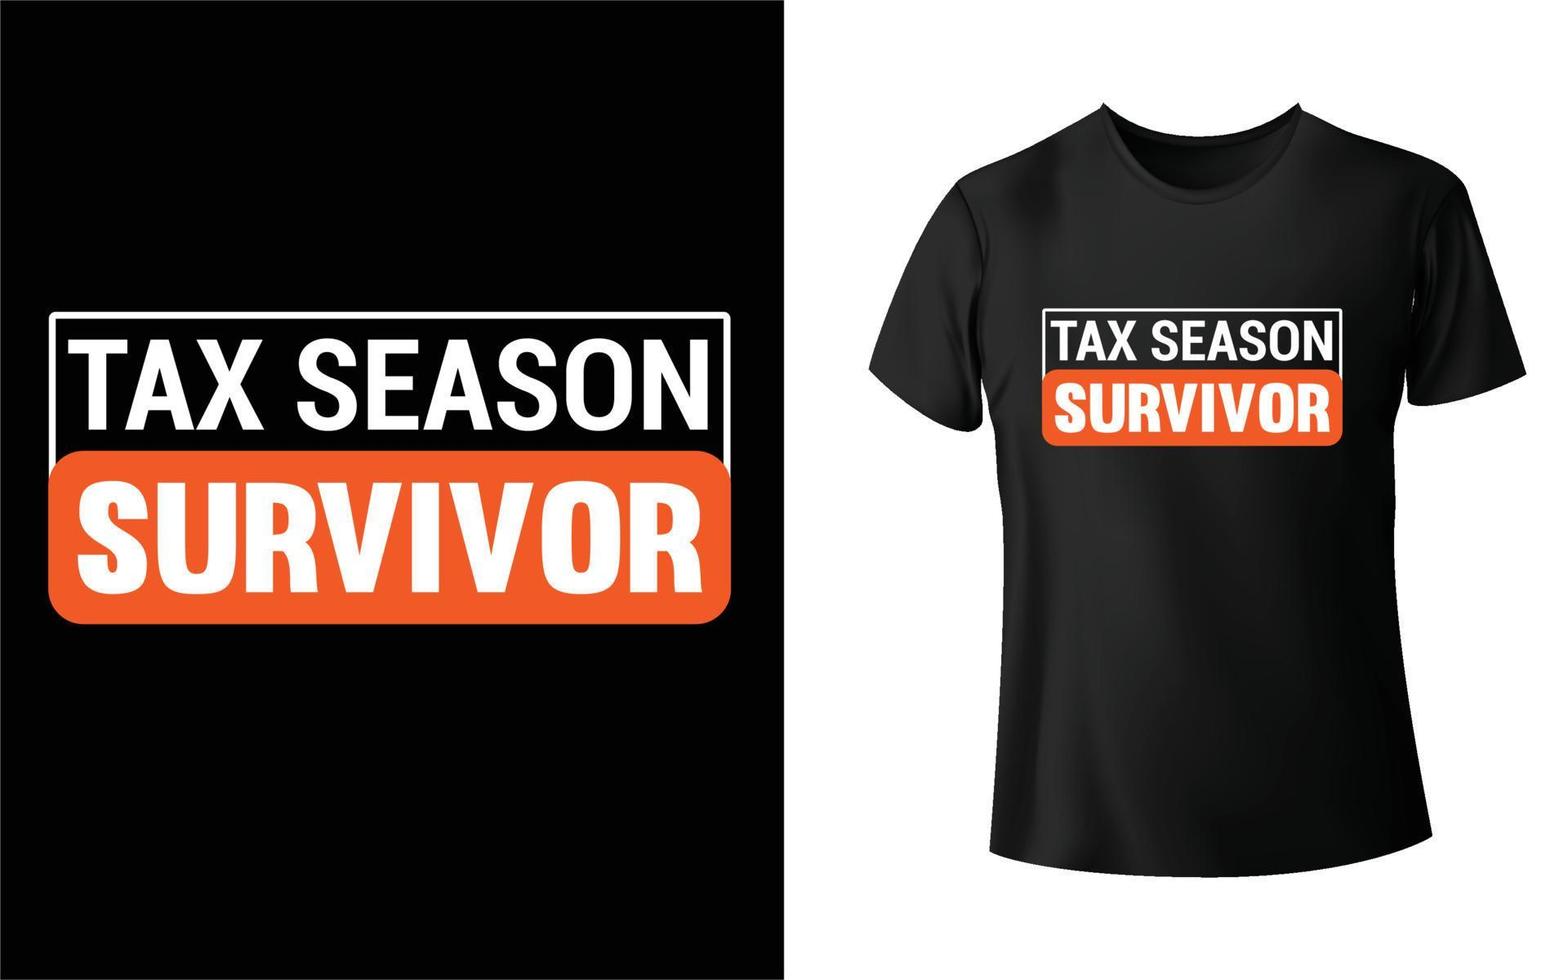 Tax season survivor t shirt design vector